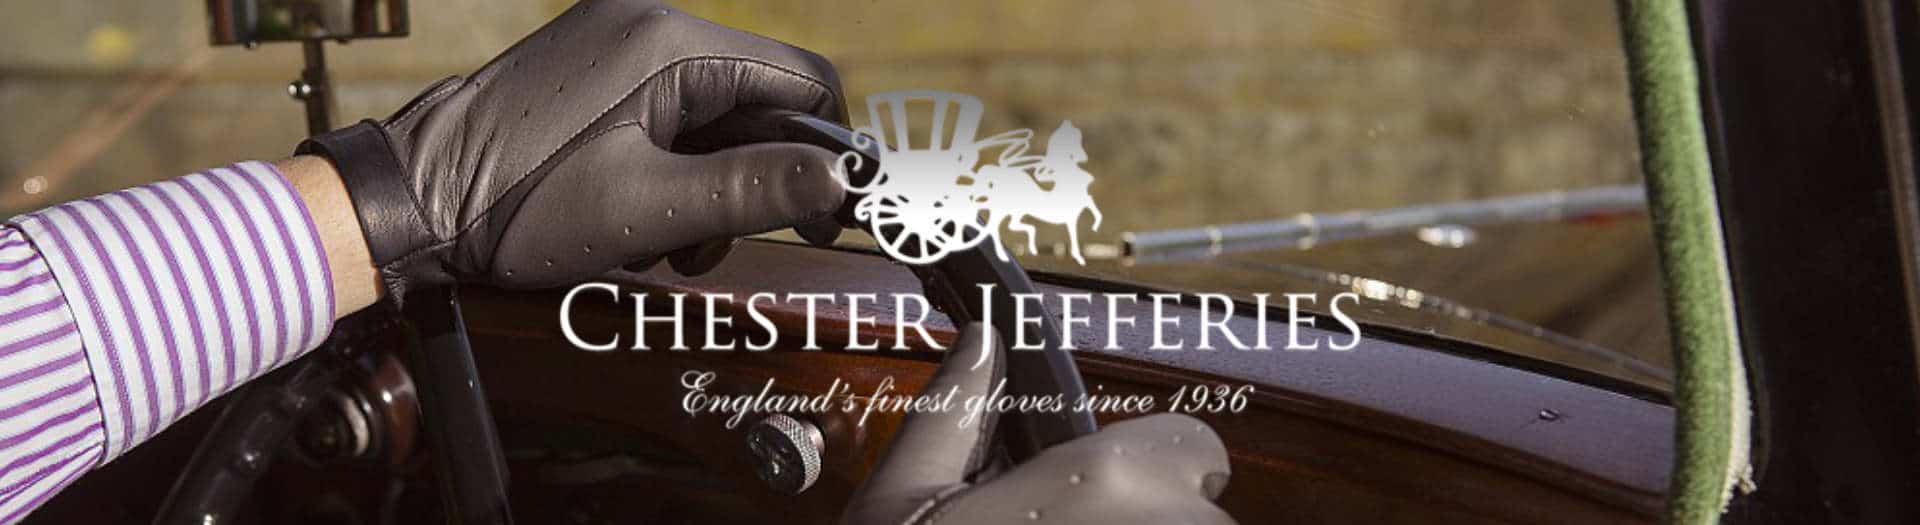 1920x525 Chester Jefferies header with logo